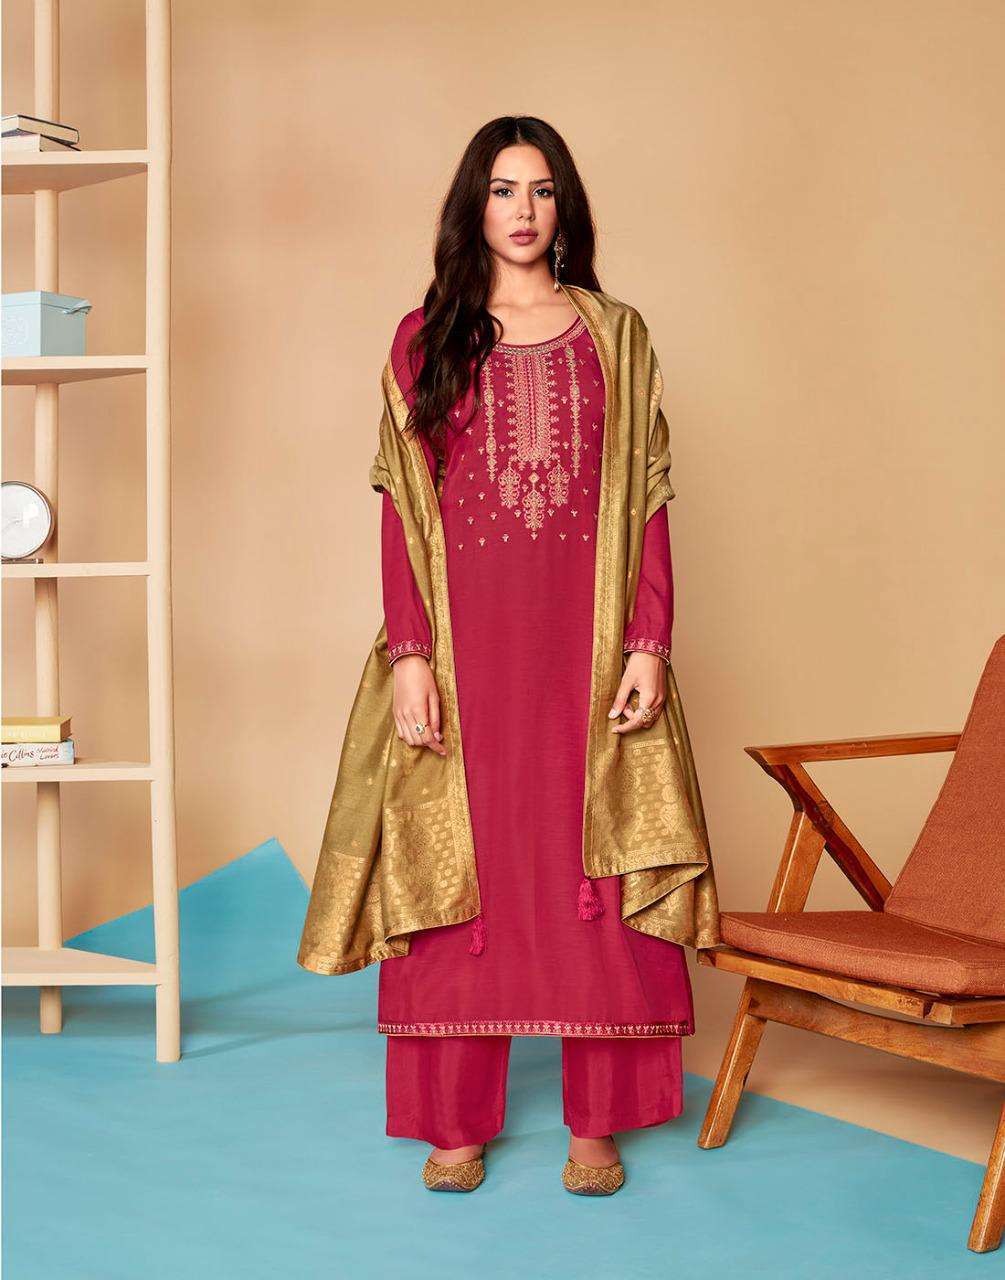 Aashirwad Mor Bagh Saaras Linen Silk With Embroidery Work Dress Material Buy Silk Dress Material Wholesale